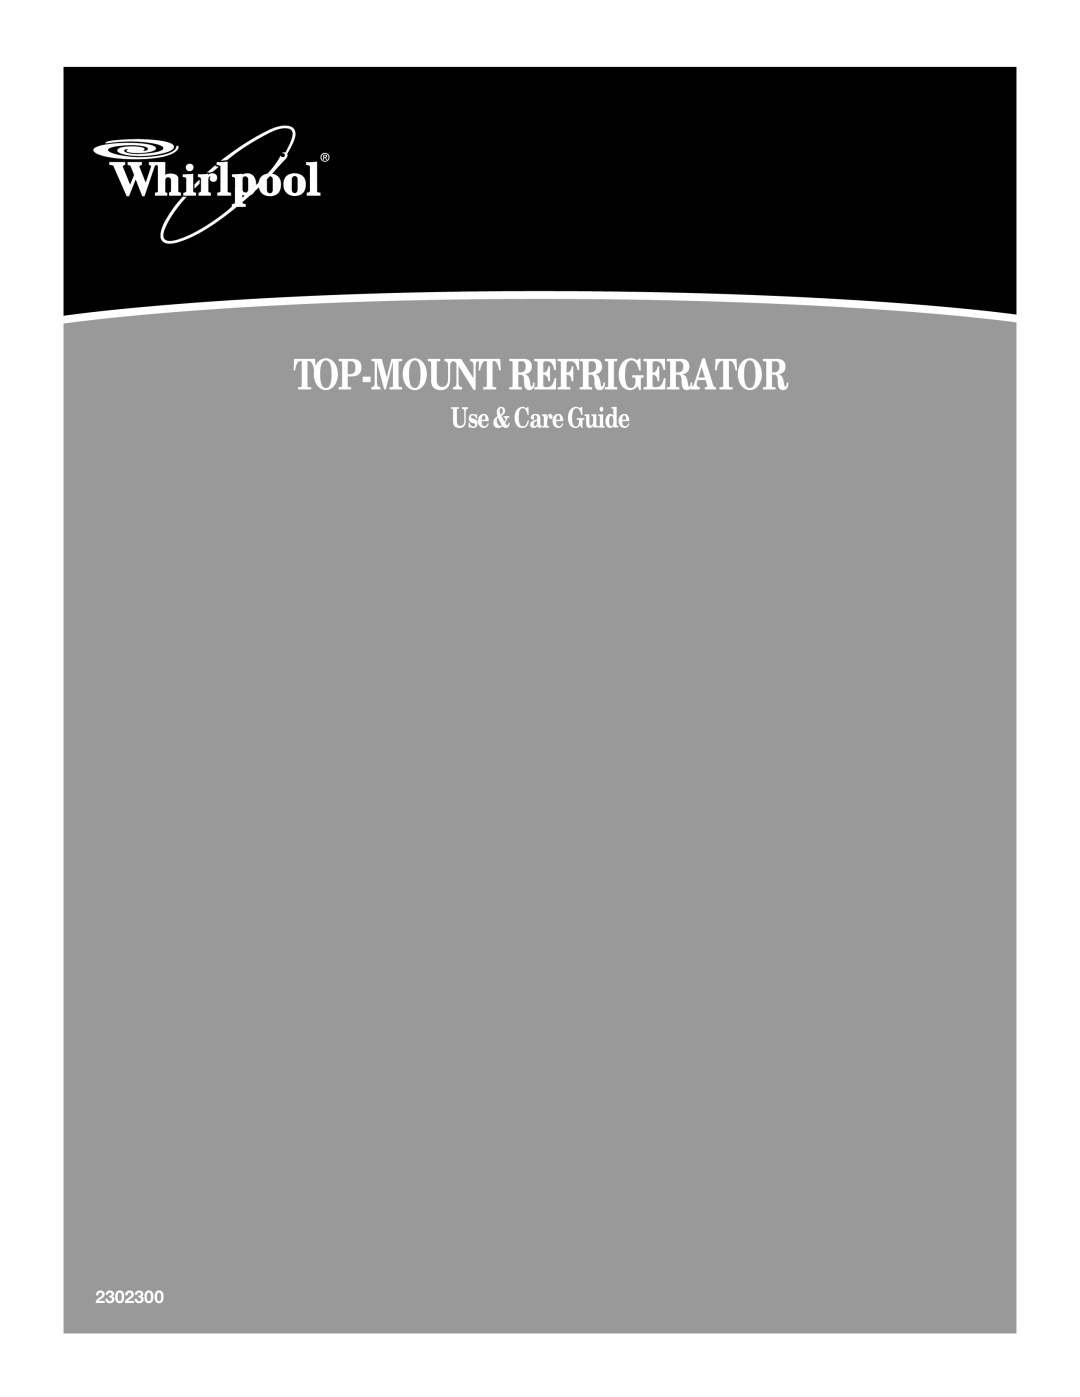 Whirlpool 8ET8MTKXKT04 manual Top-Mountrefrigerator, Use & Care Guide, 2302300 